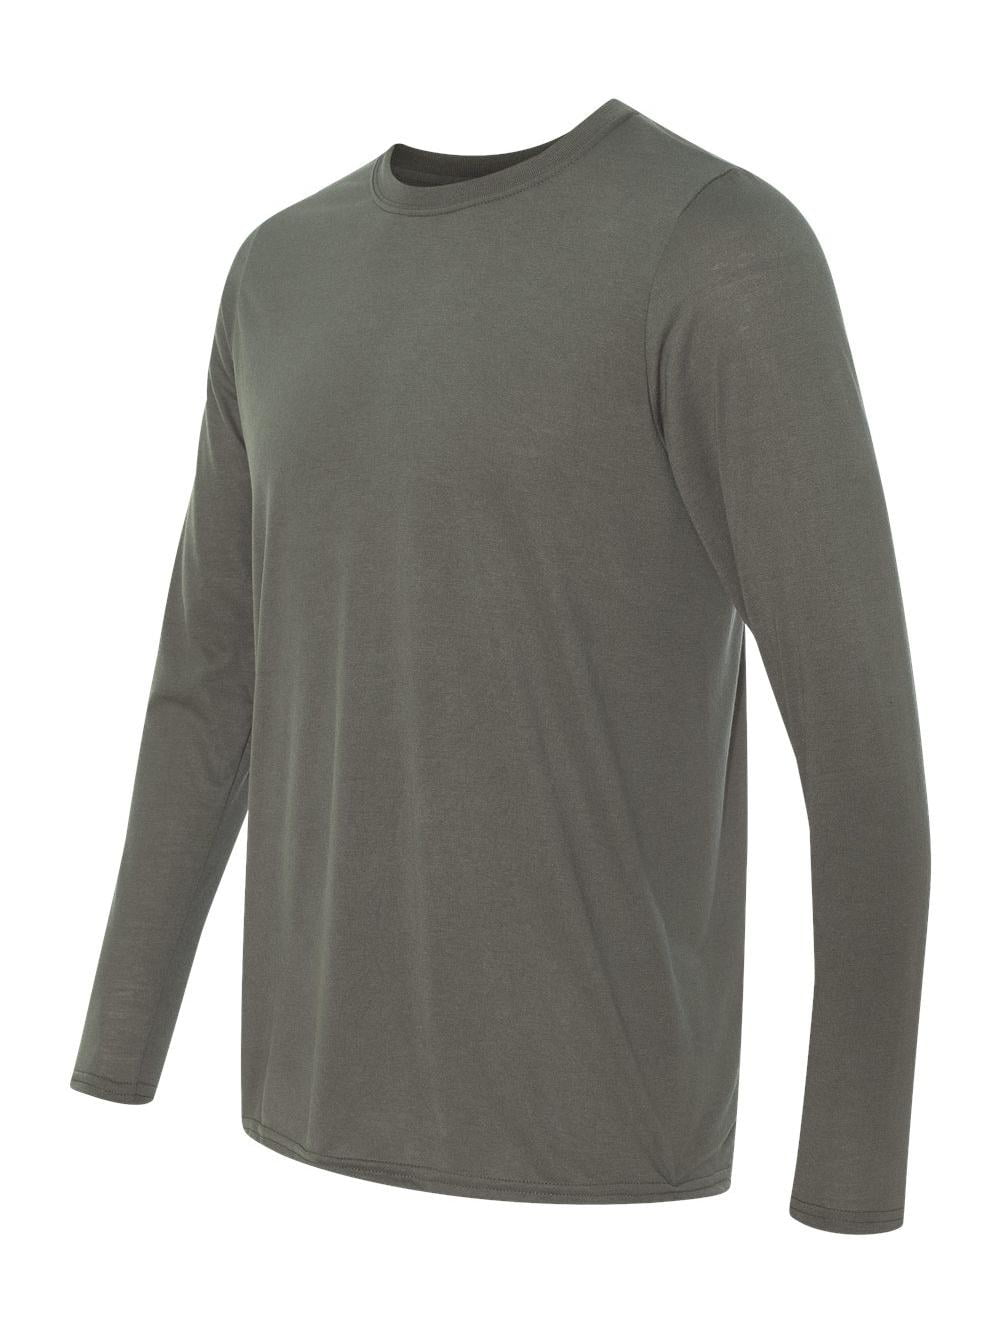 Gildan - Performance Long Sleeve T-Shirt - 42400 - Charcoal - Size: S ...